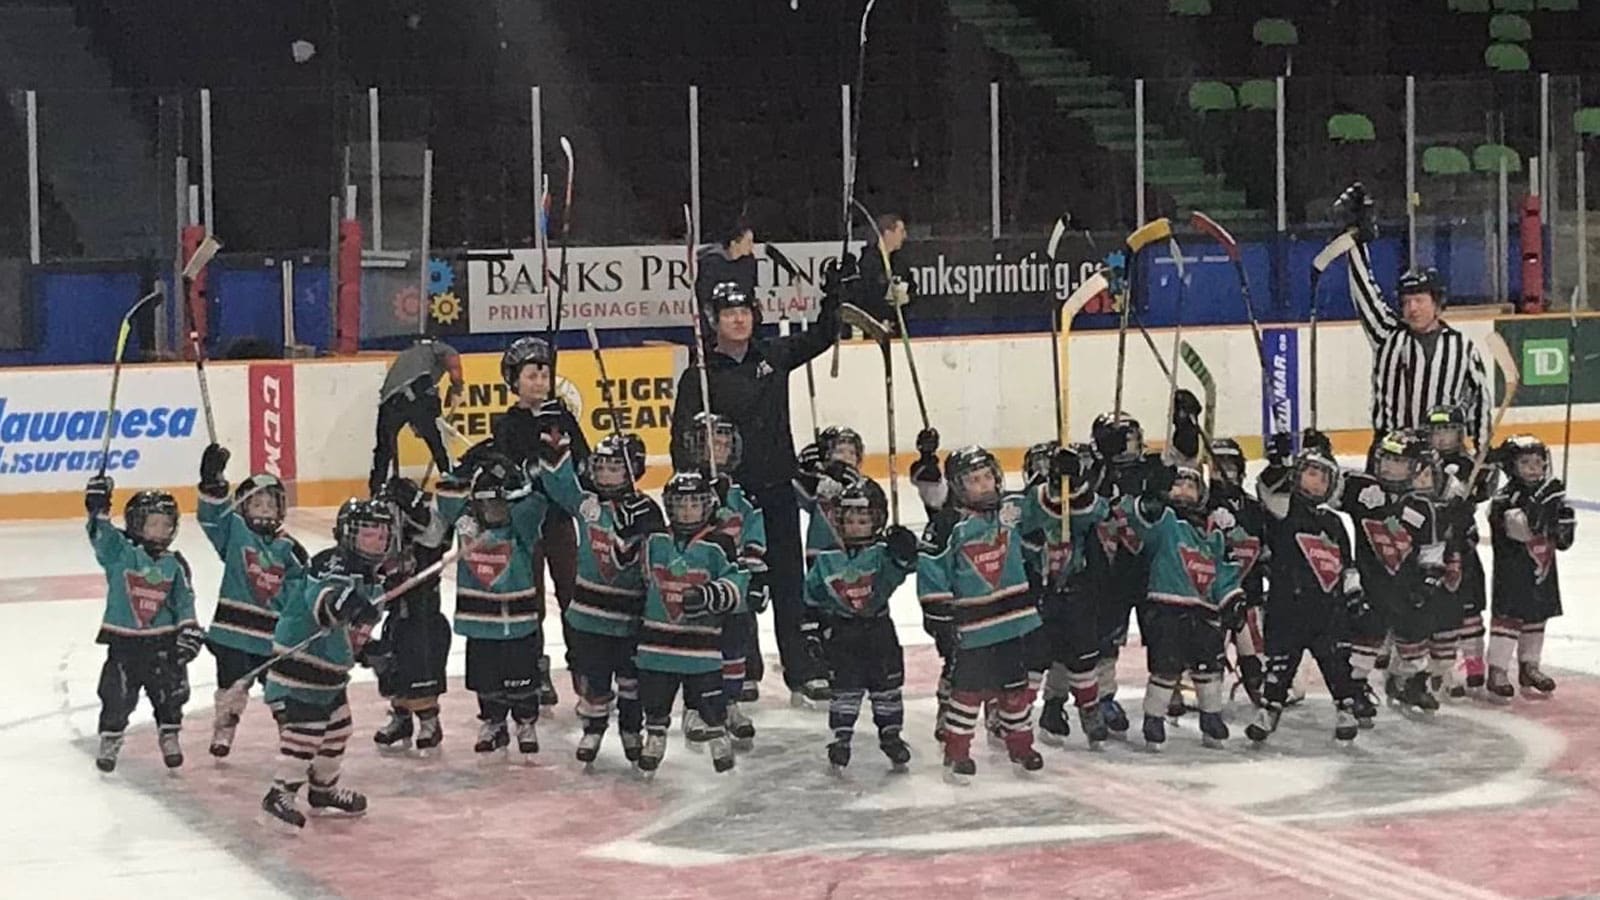 Scott Phelan and a minor hockey team salute their fans